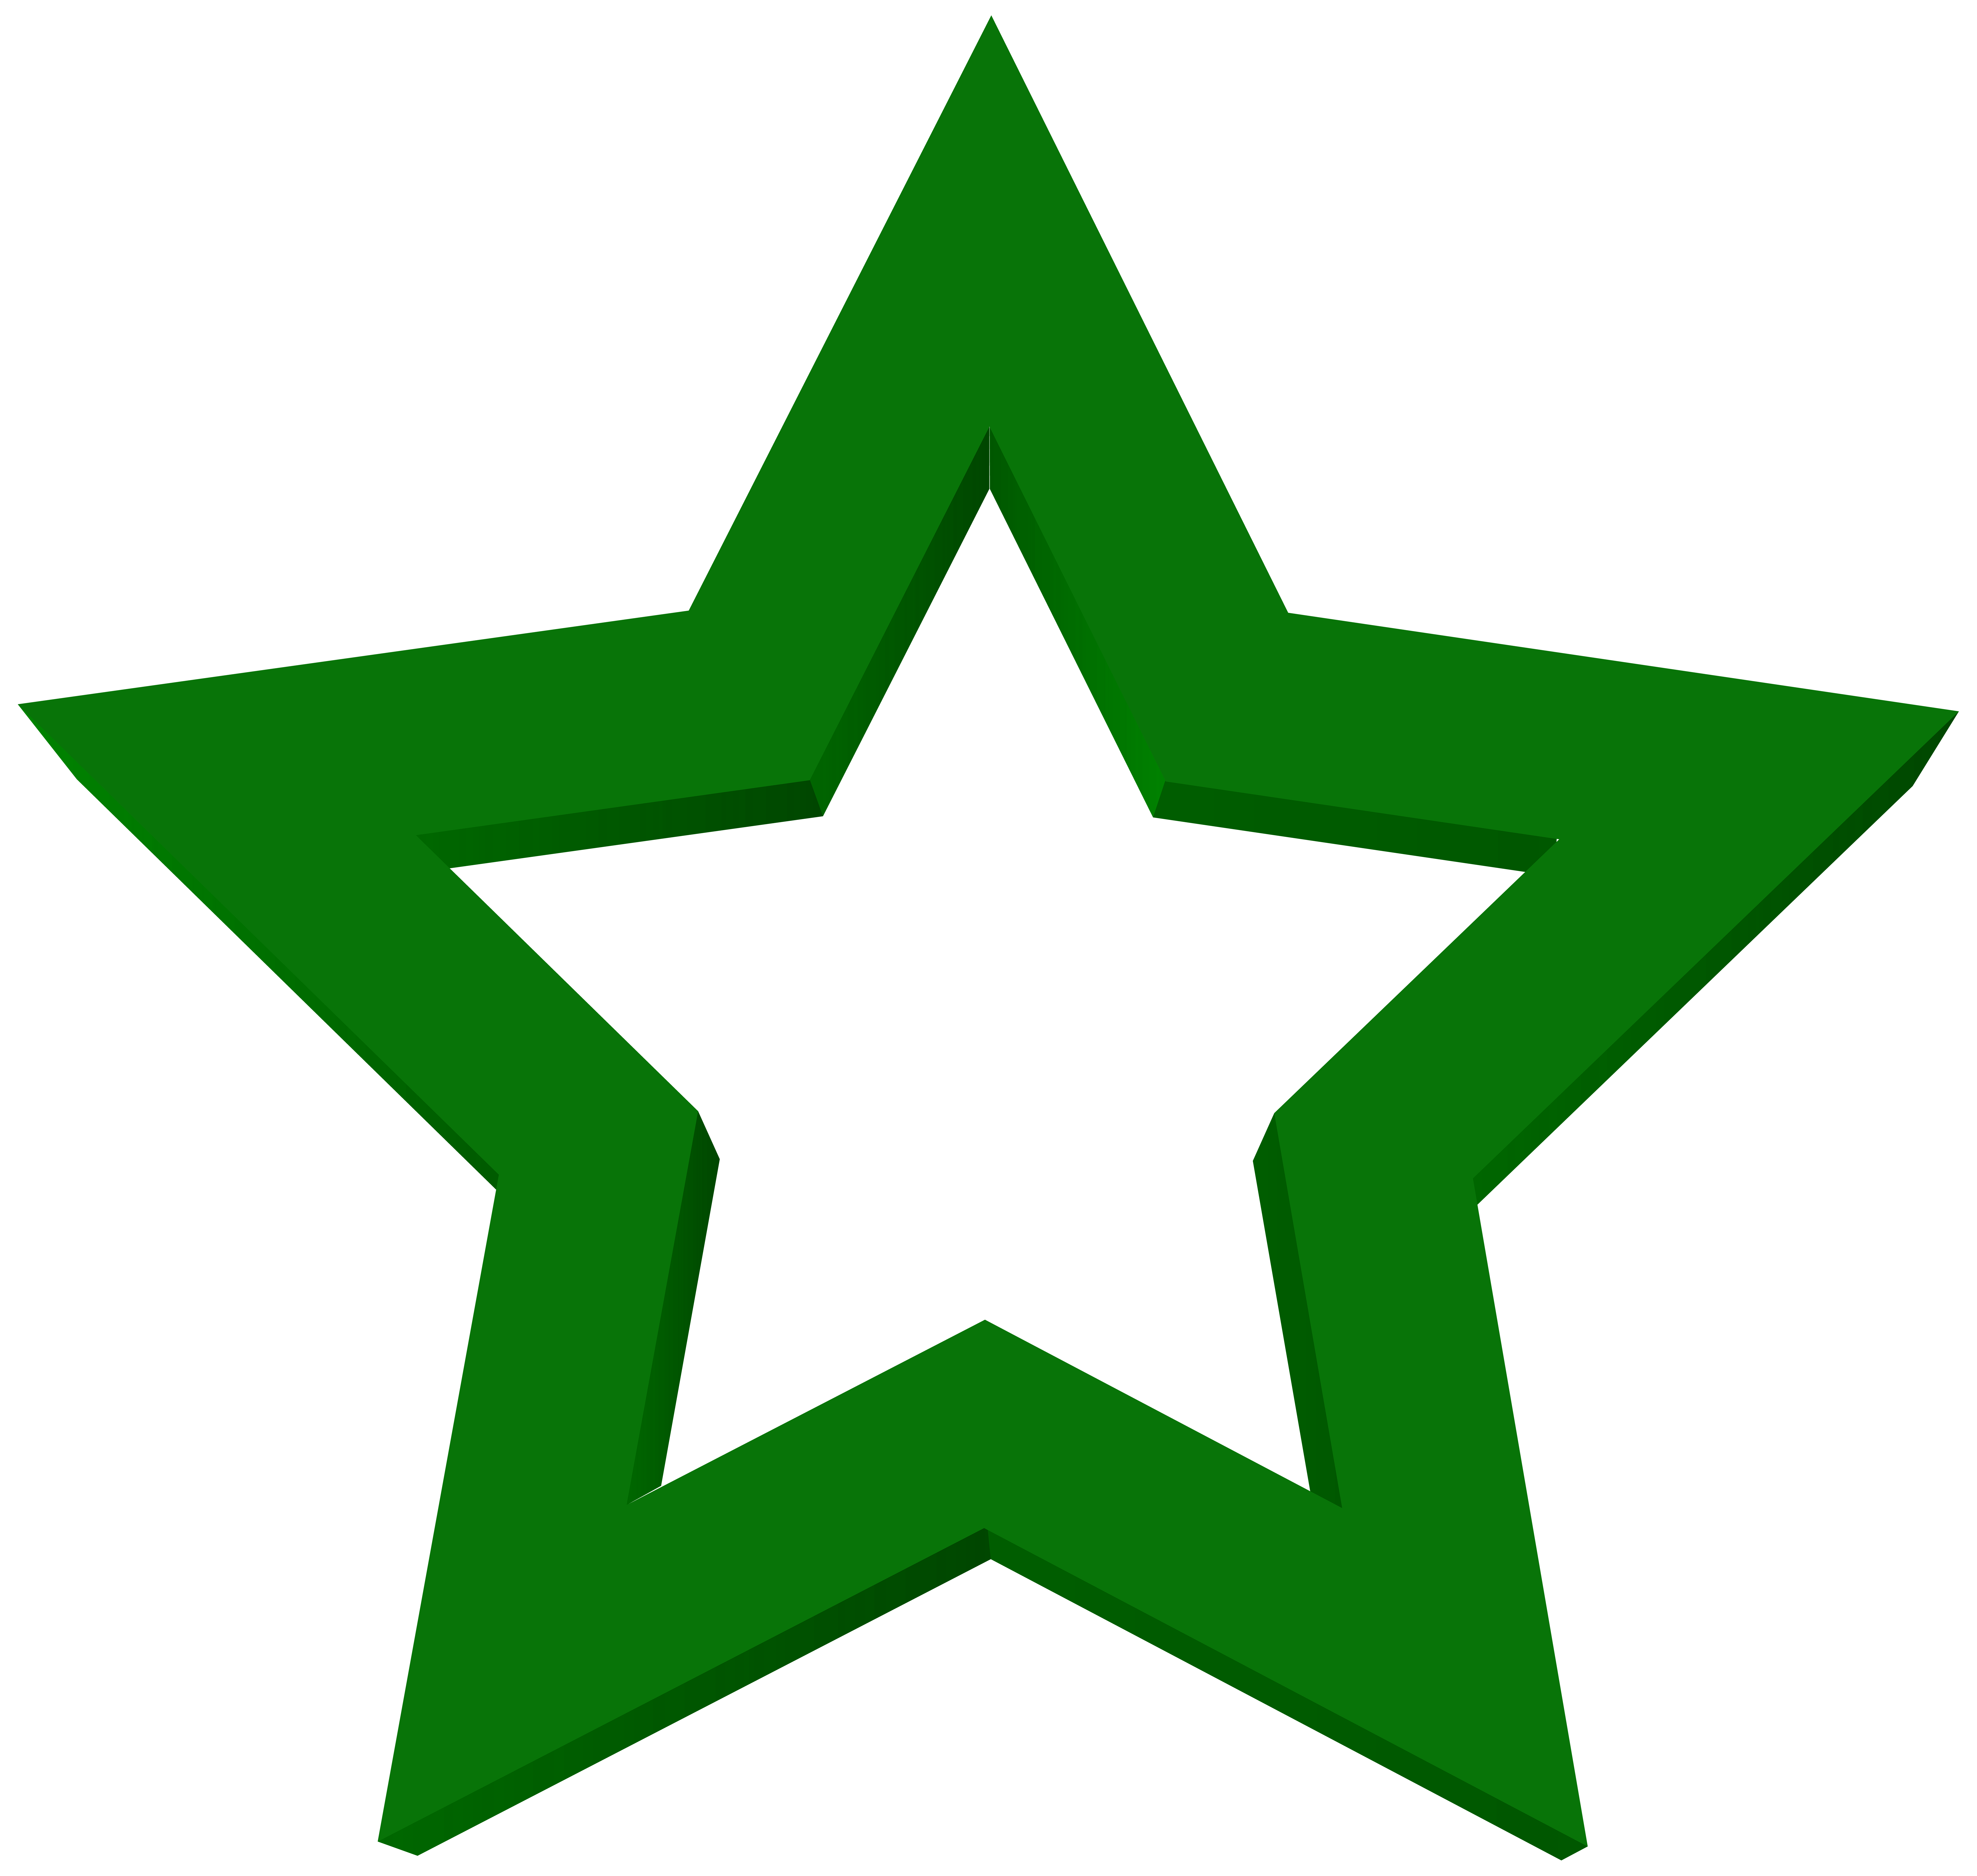 Green Star